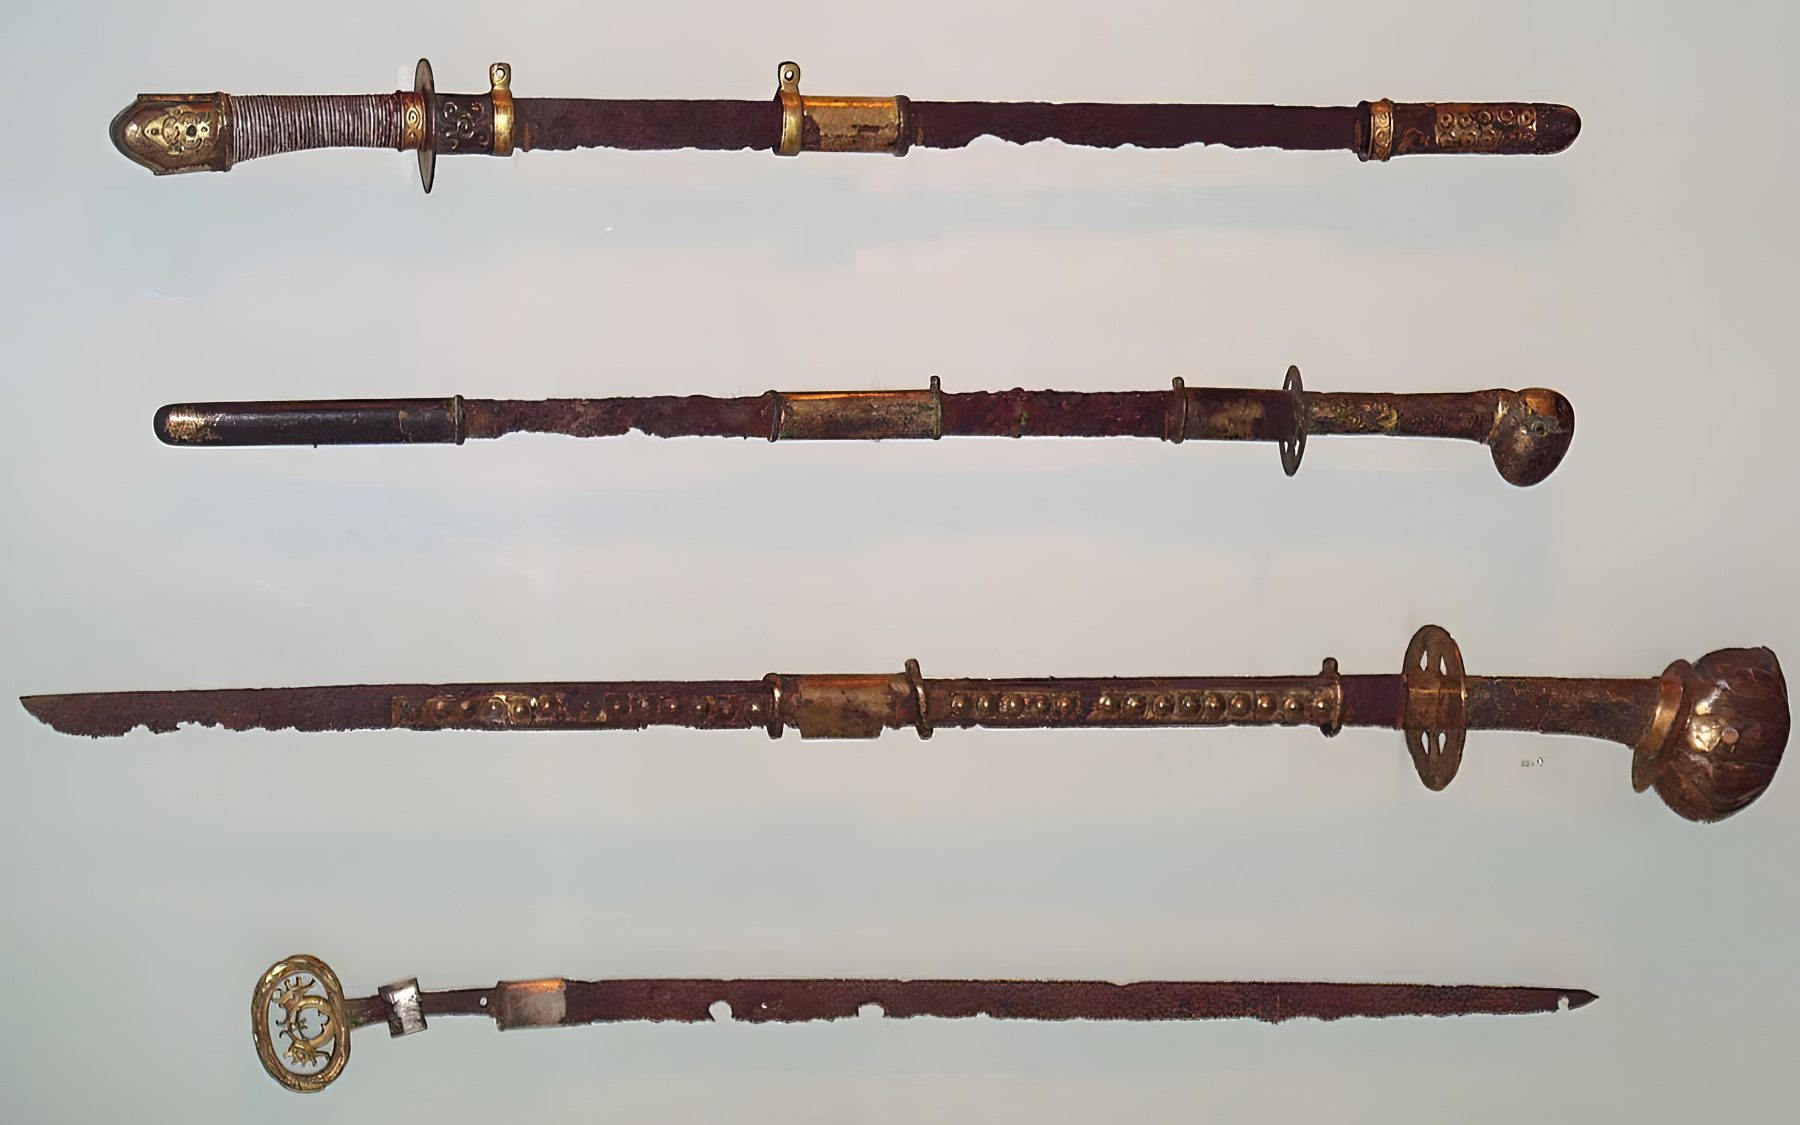 7 Straight Japanese Swords: The Forgotten Blades of Japan